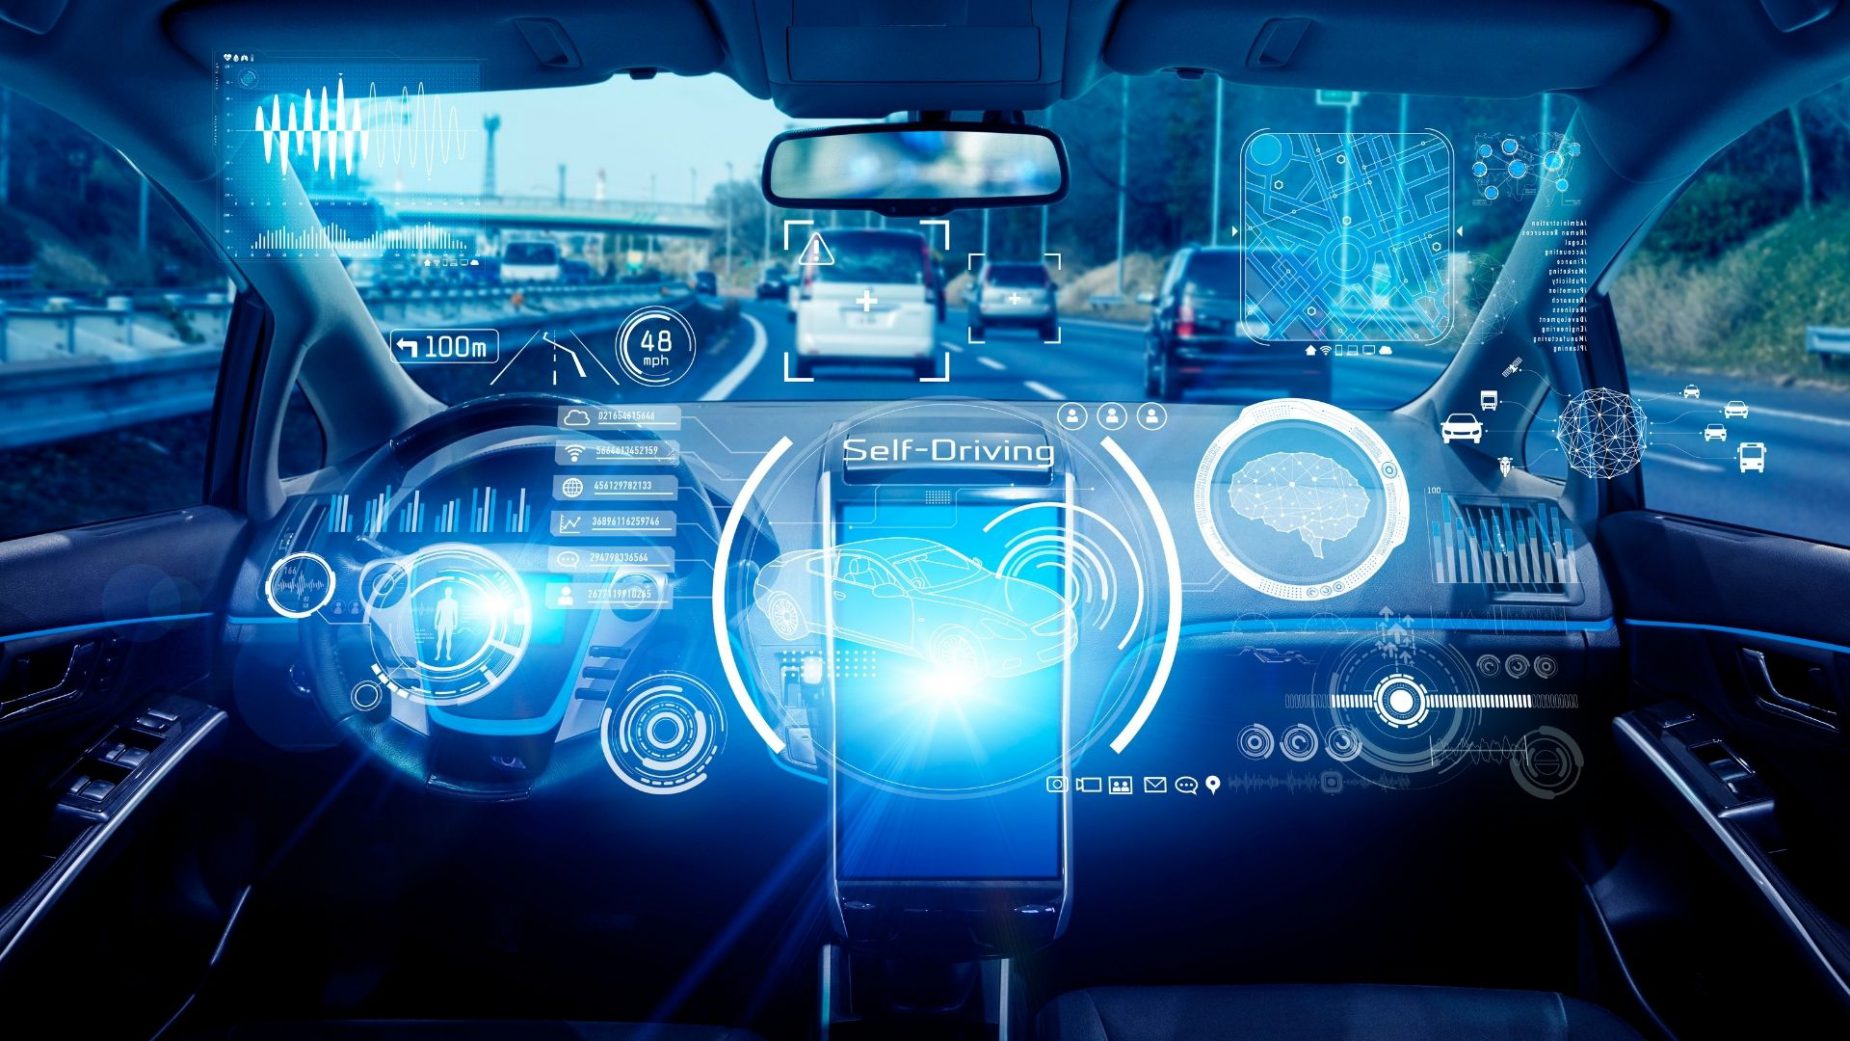 Global Autonomous Commercial Vehicle Market Overview And Prospects